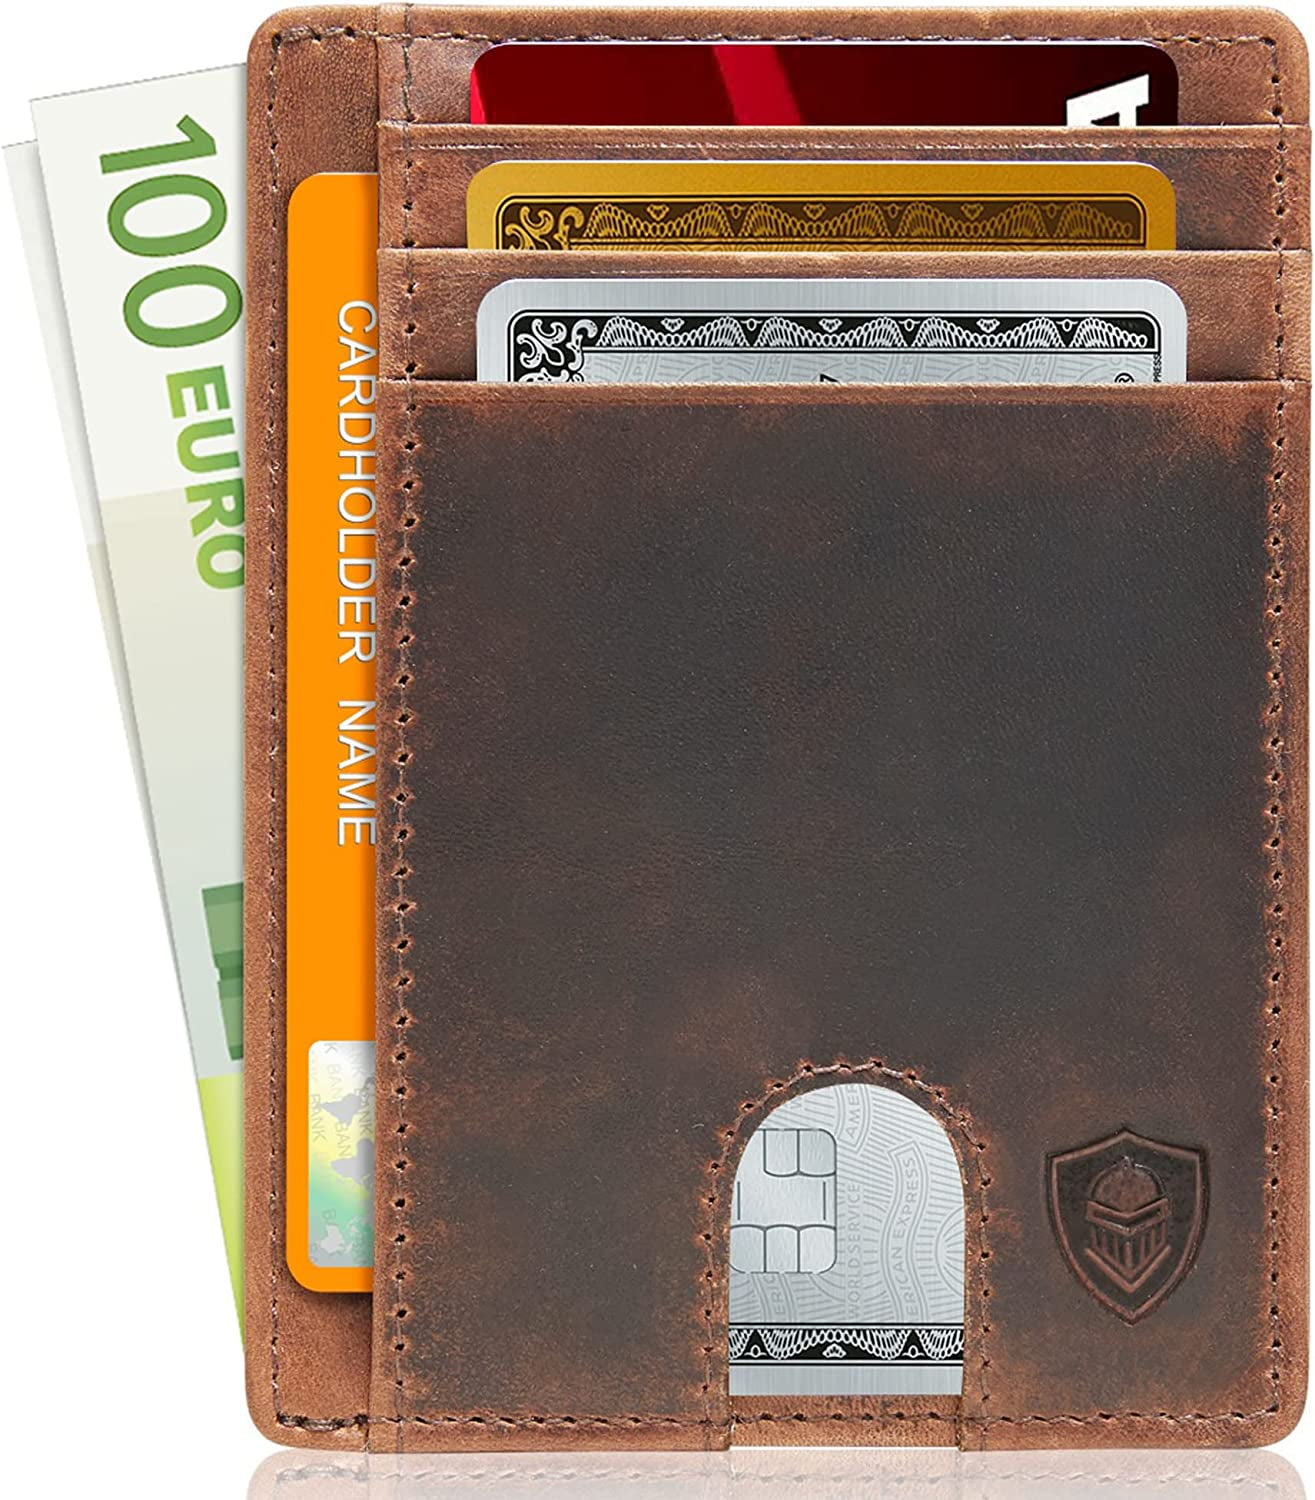 Slim Minimalist Wallets for Men & Women - Leather Card Case Front Pocket Thin Mens Wallet RFID Credit Card Holder Holiday Gifts for Men